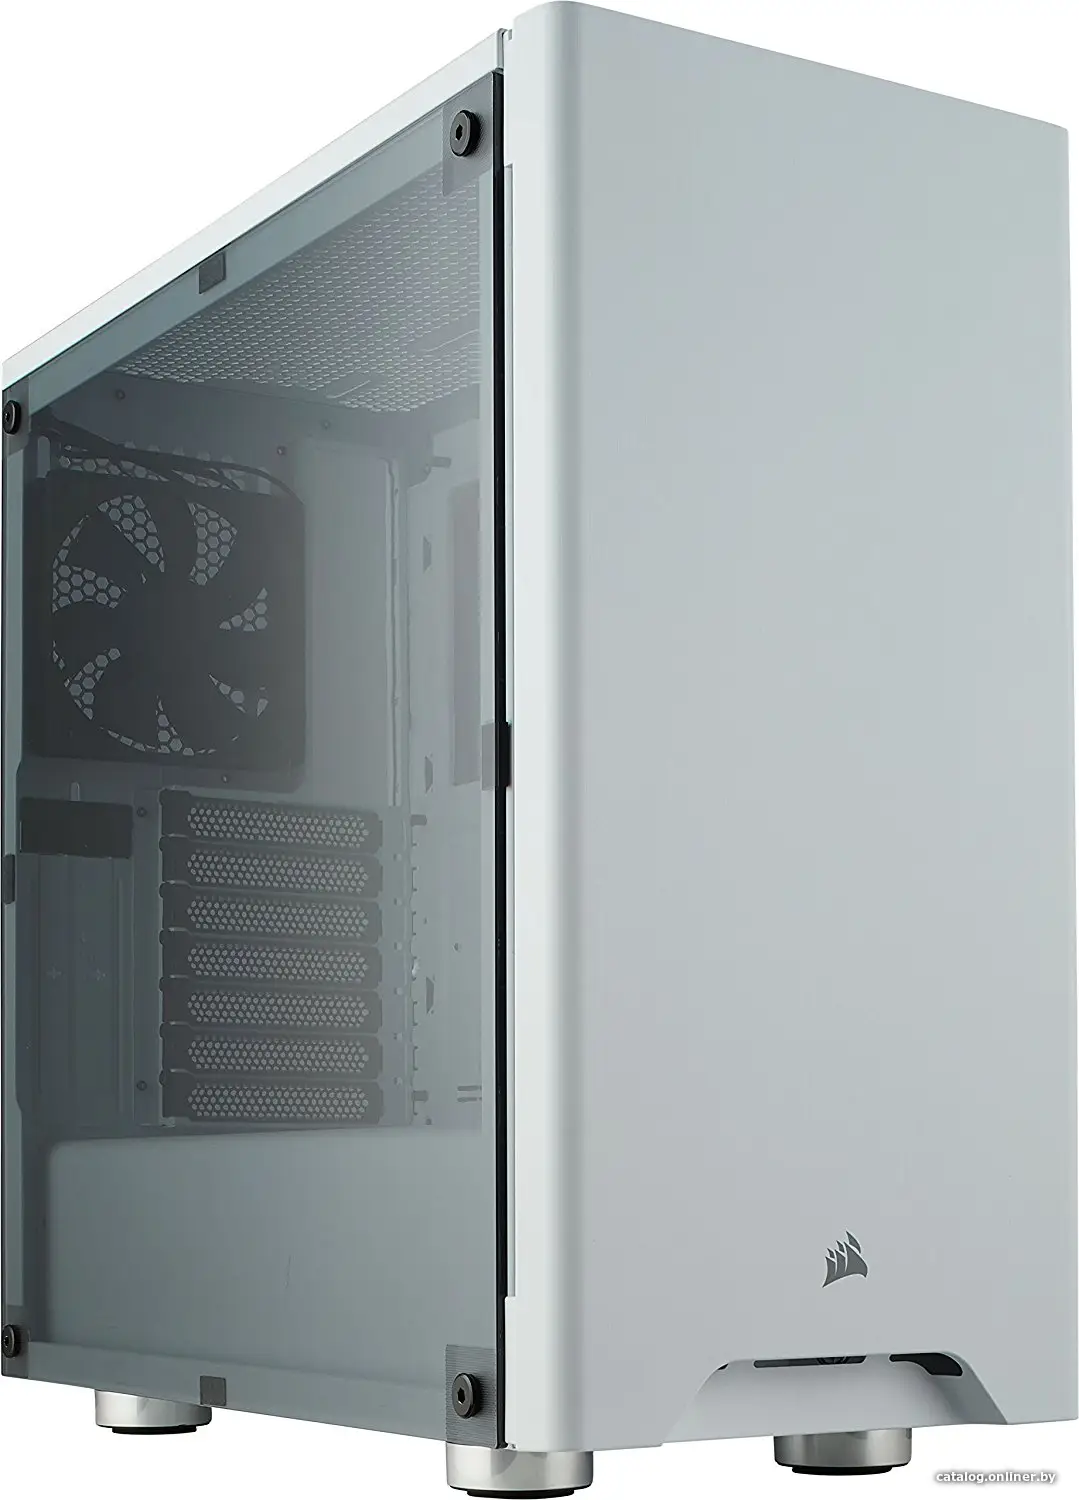 Купить CORSAIR Carbide Series 275R Mid-Tower Gaming Case, White, цена, опт и розница